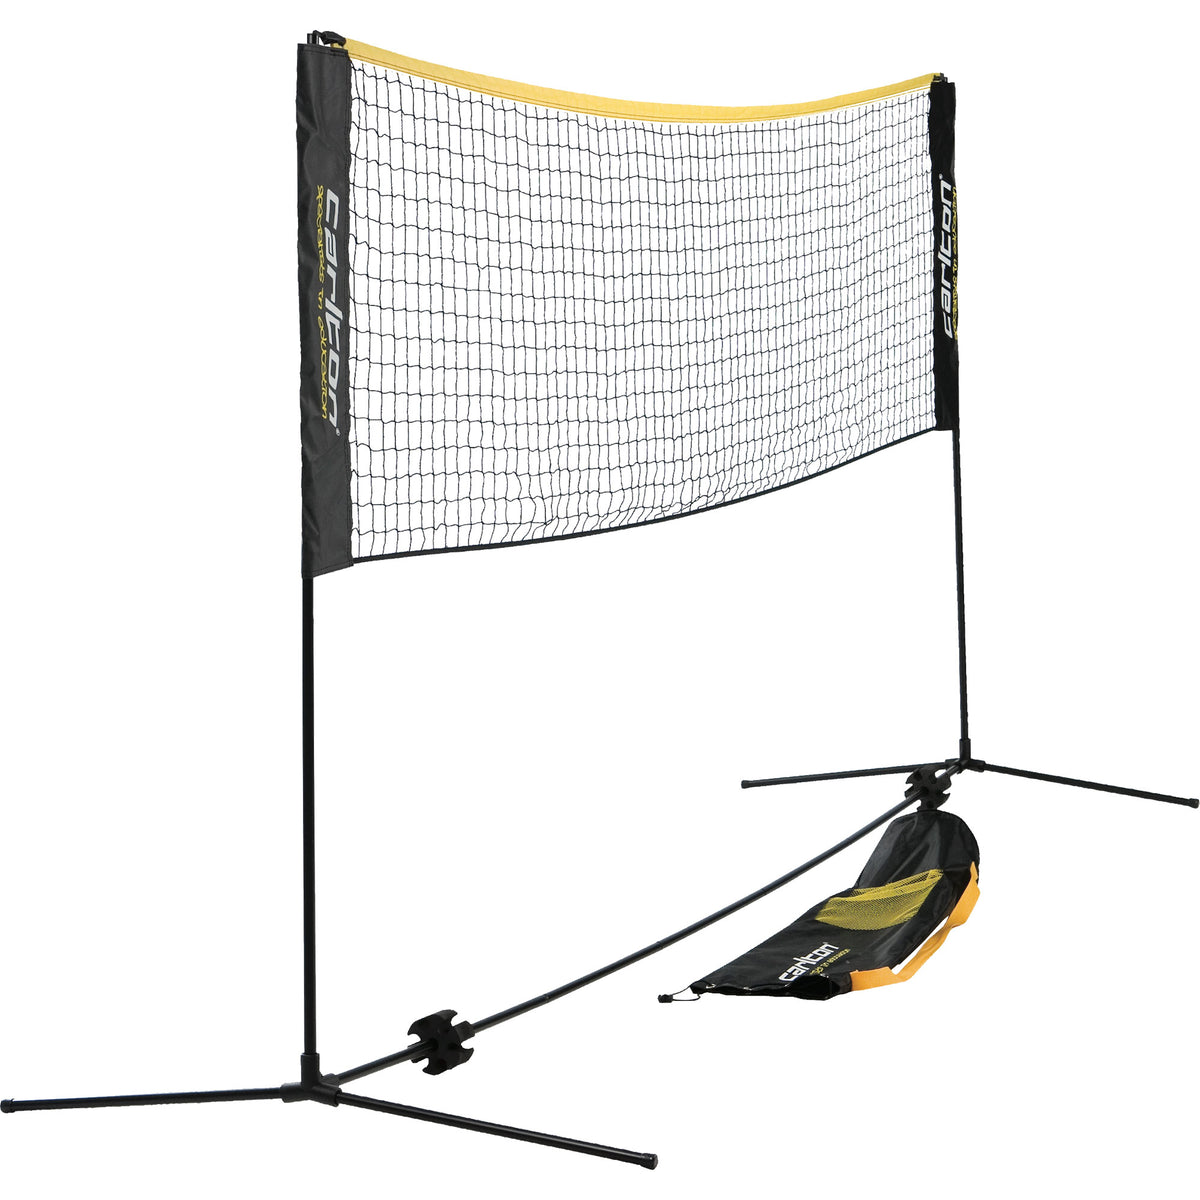 Carlton Badminton Net